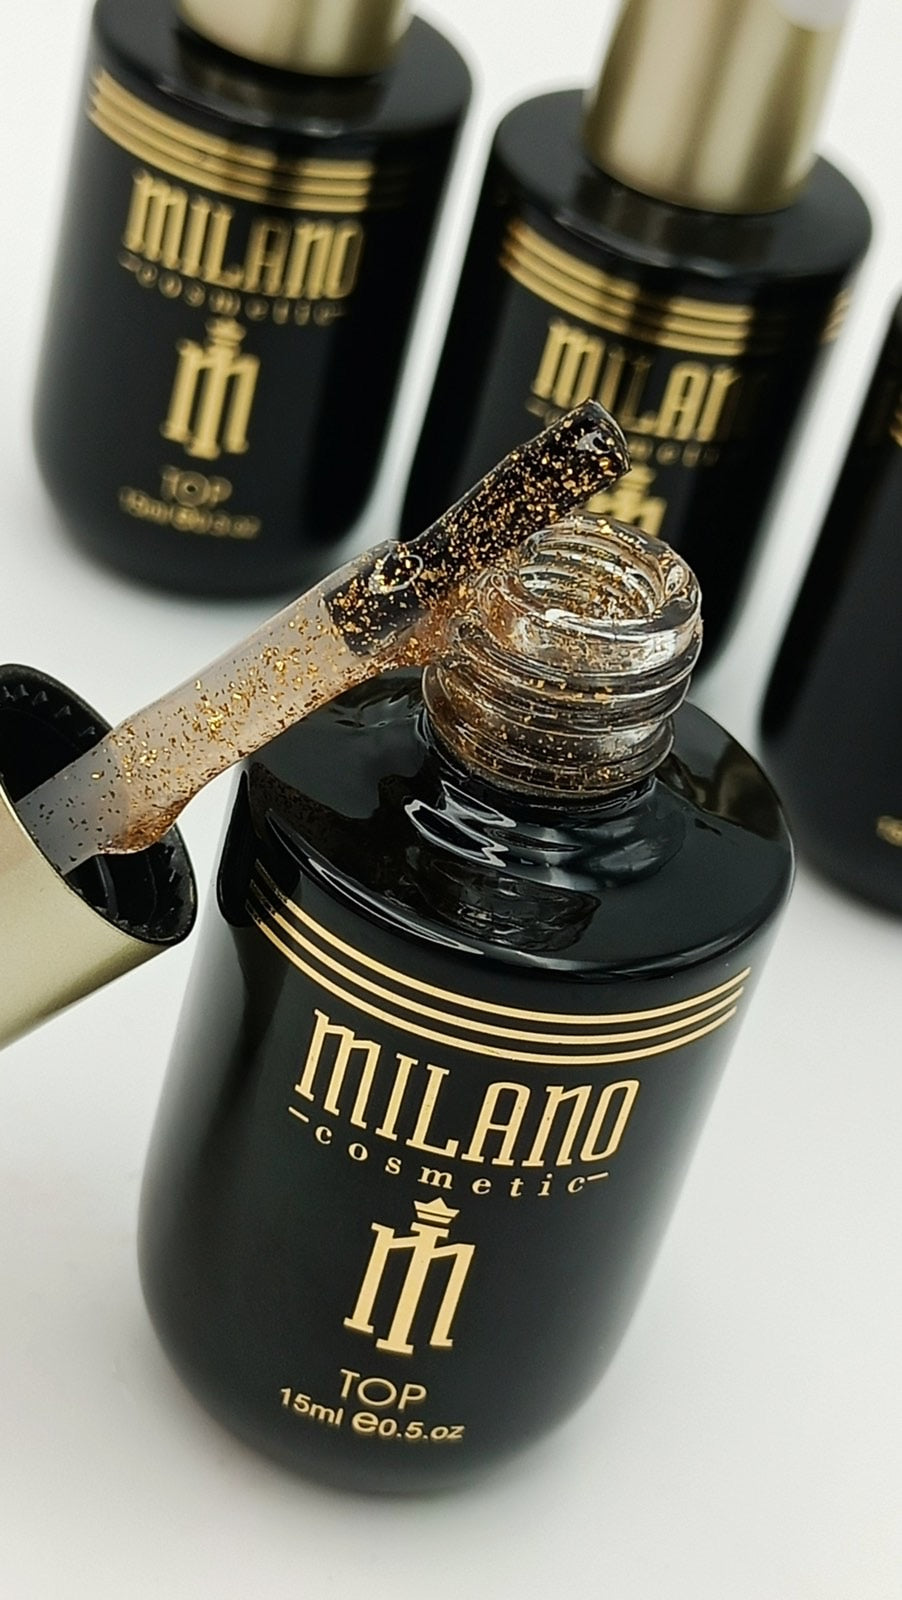 Top Gold Shimmer Milano 12 ml